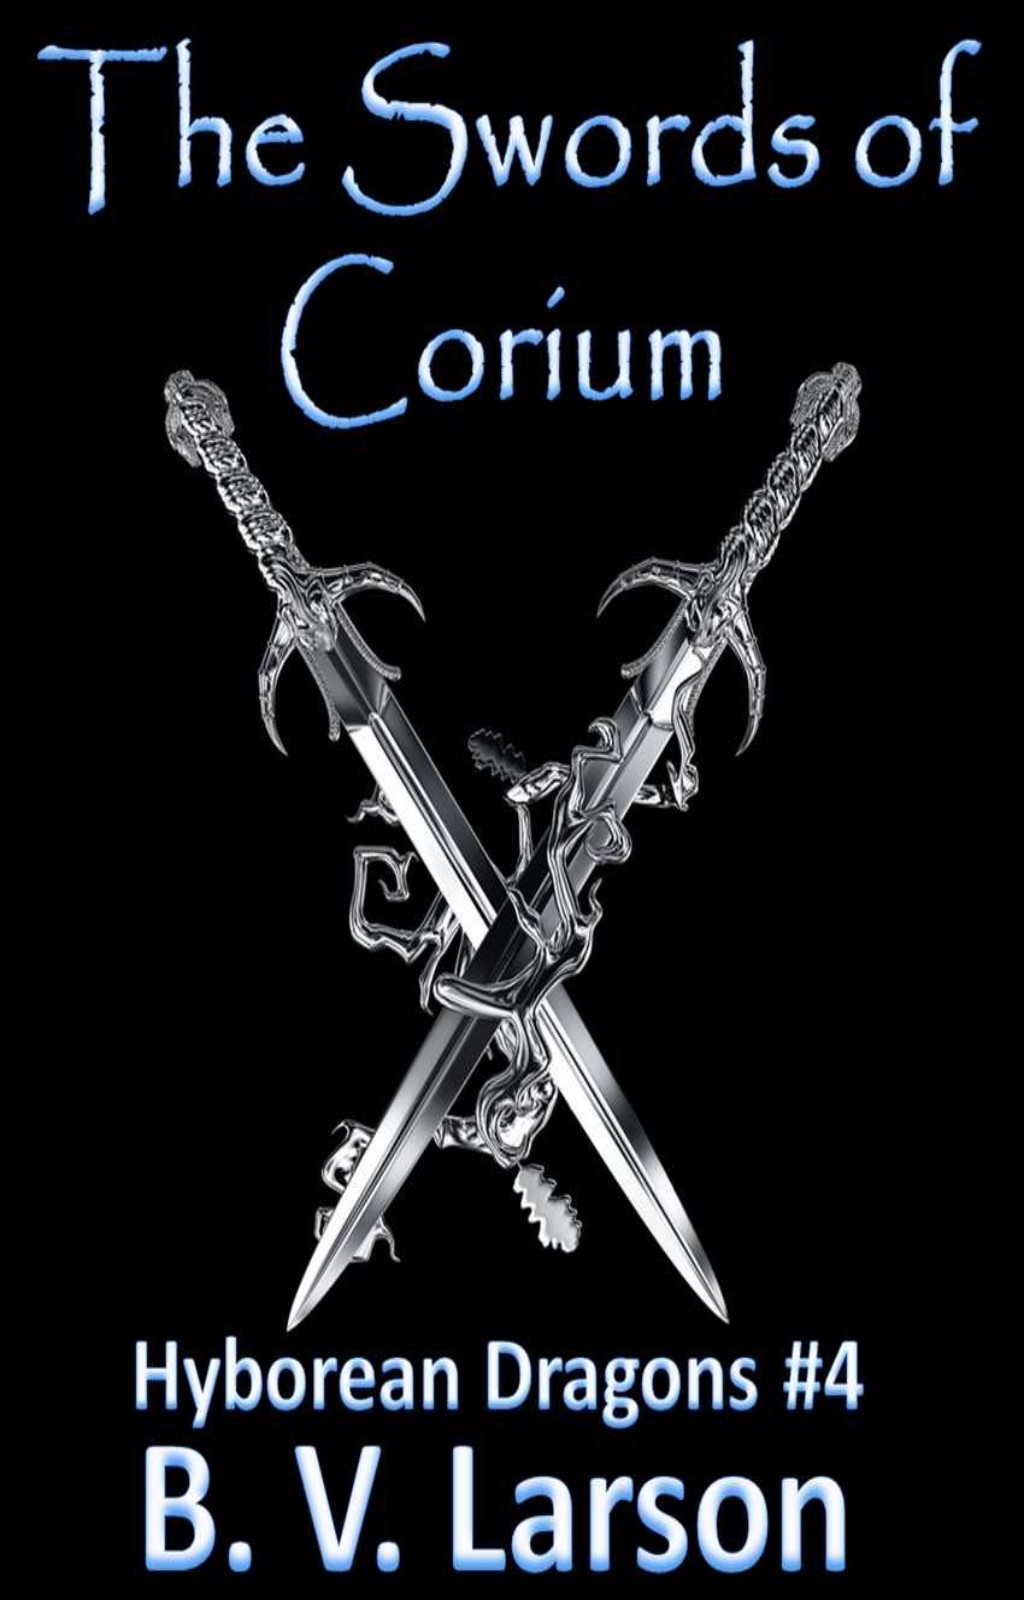 The Swords of Corium by B. V. Larson